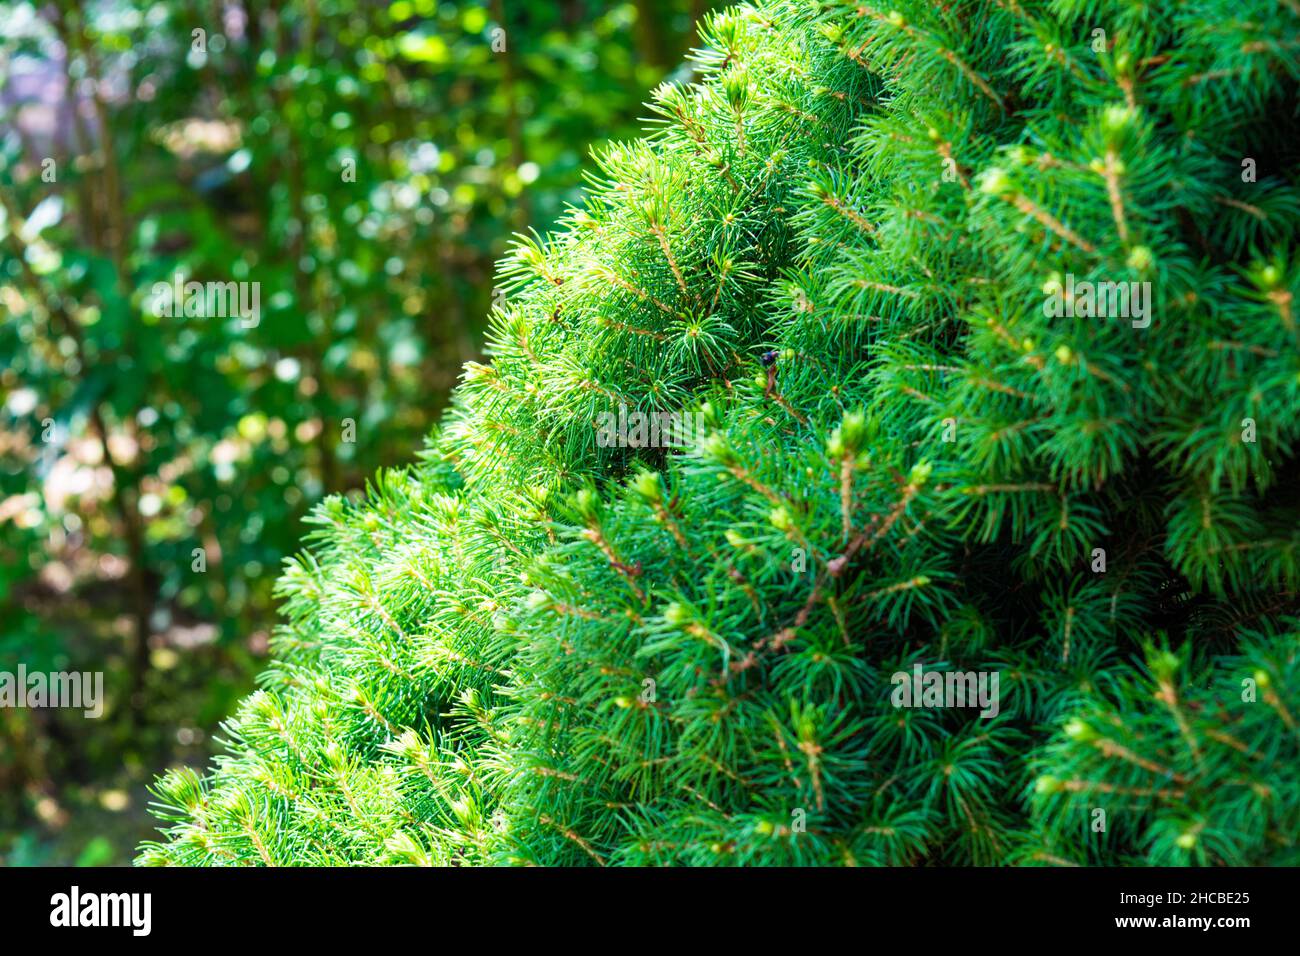 Canadian spruce green foliage. Decorative coniferous evergreen tree in garden Stock Photo